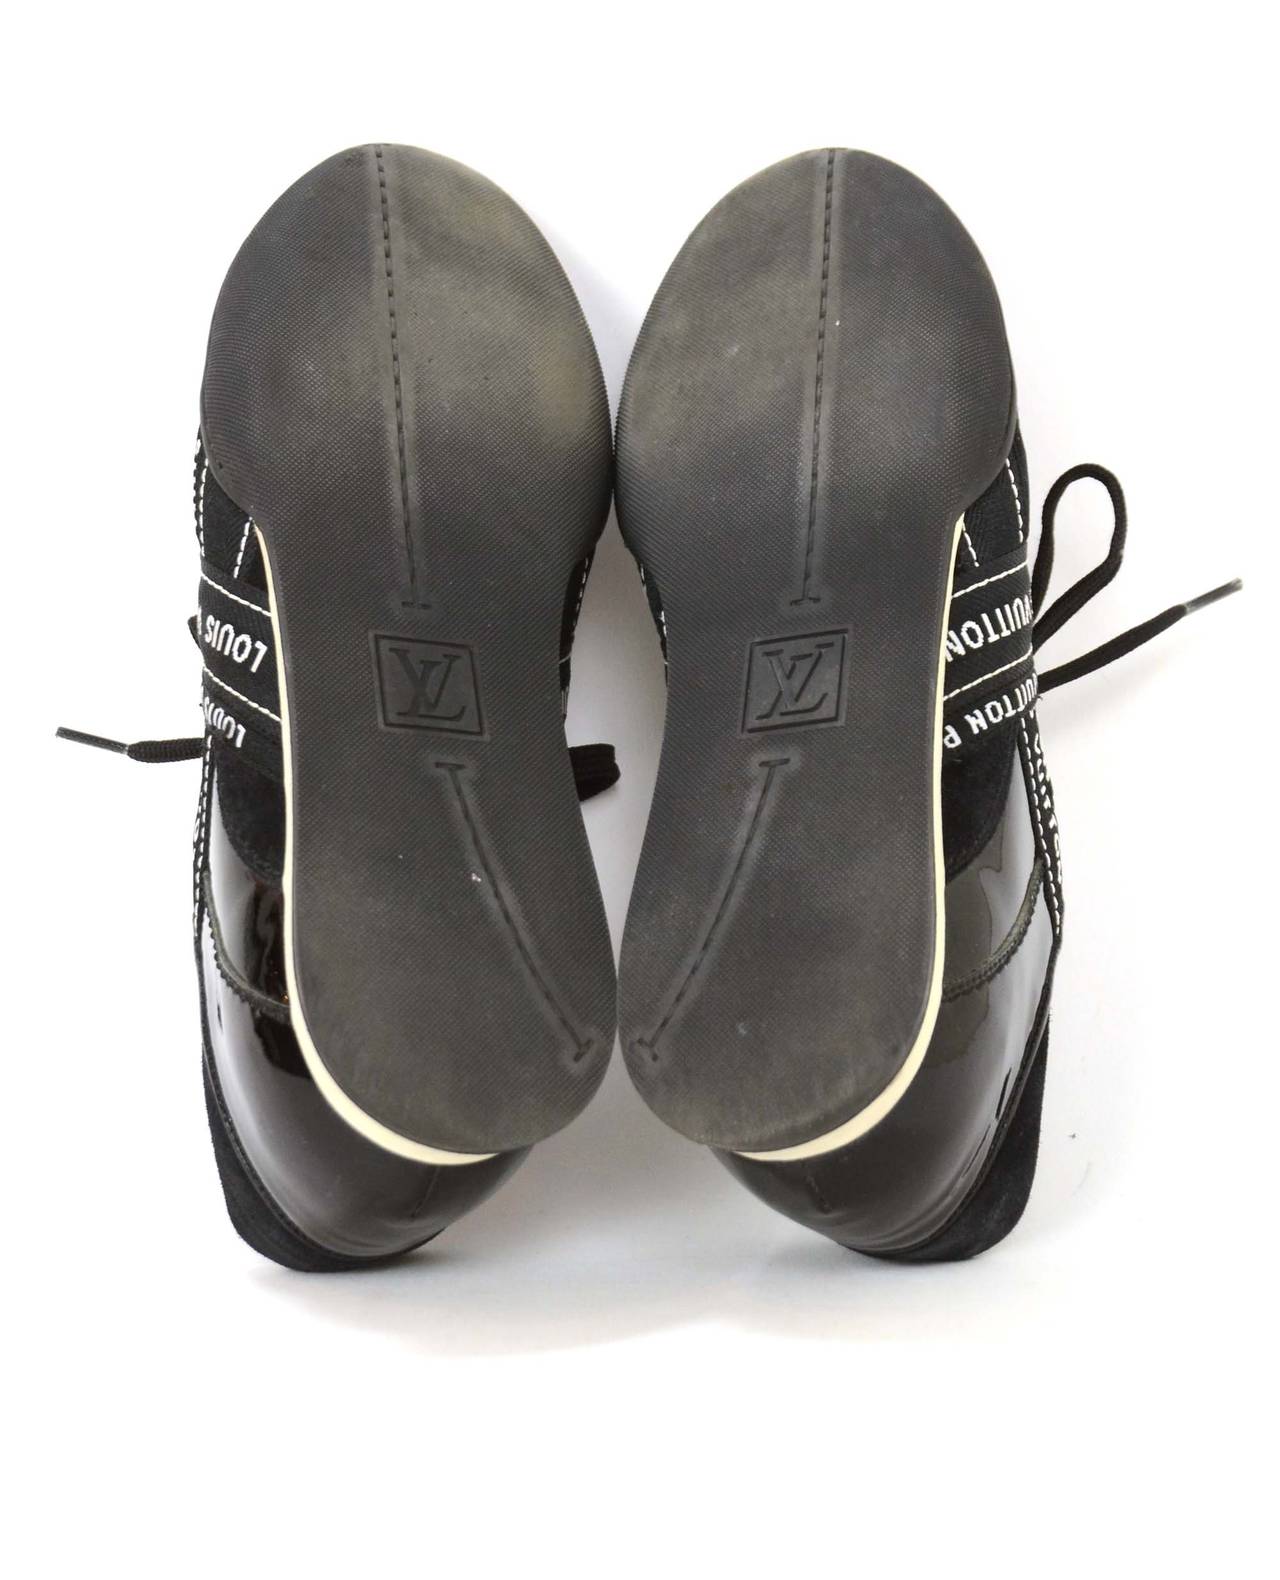 LOUIS VUITTON Black Patent Leather & Suede Sneakers sz 37.5 2